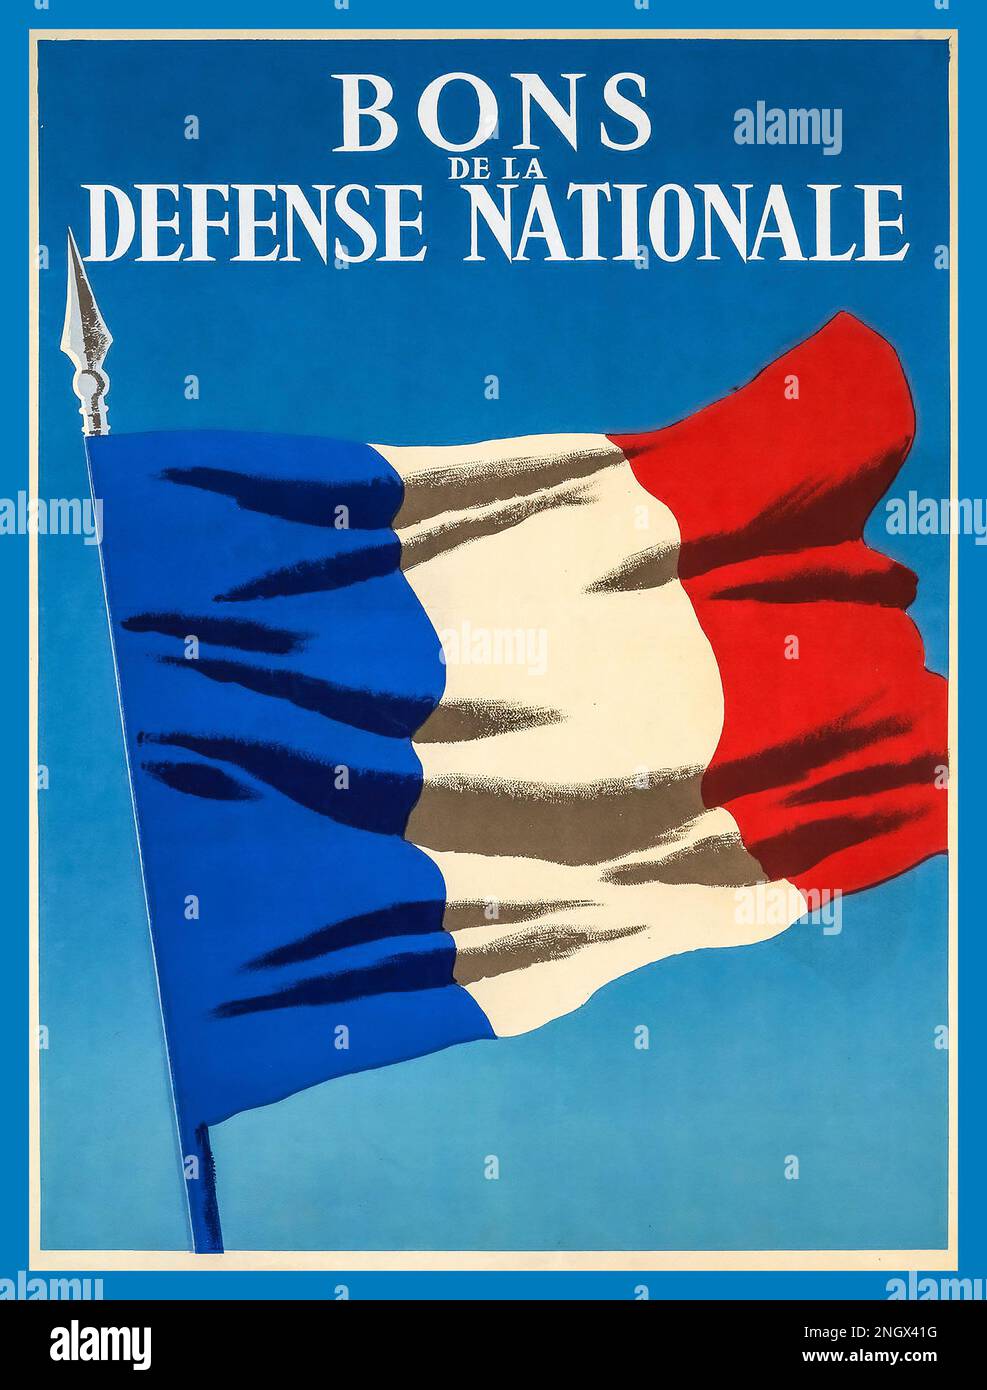 FRANCE WW2 FRENCH National Defence Vouchers Vintage WW2 French Poster 1940 Nazi Occupation  ‘Bons de la defense nationale’ Poster France French Tricolour Flag WW2 World War II Stock Photo